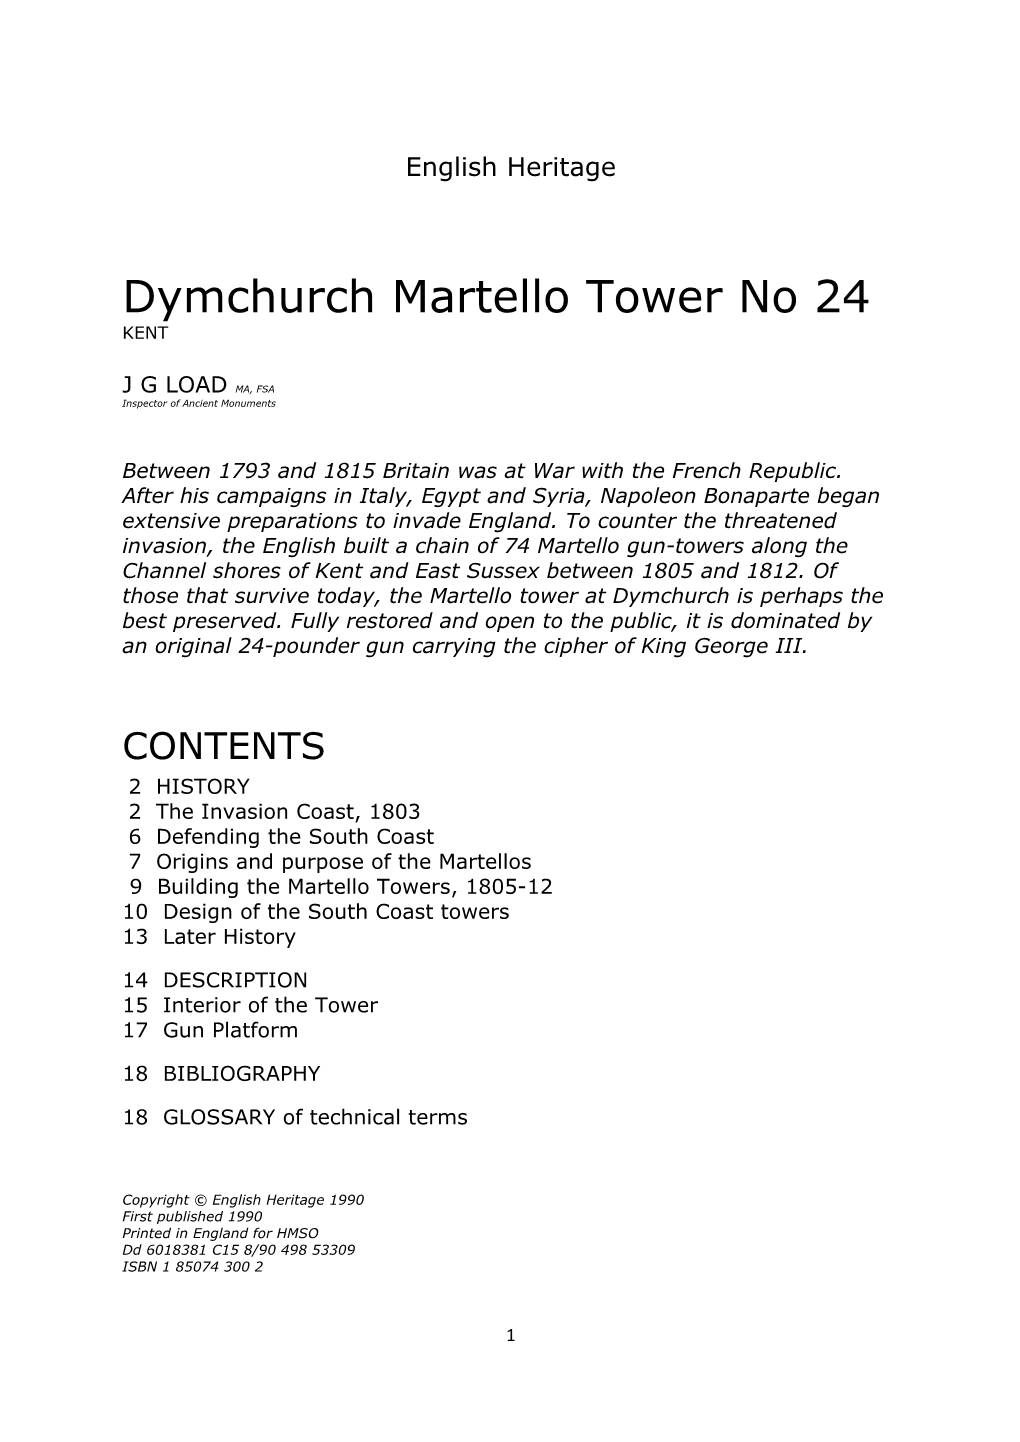 Dymchurch Martello Tower No 24 KENT